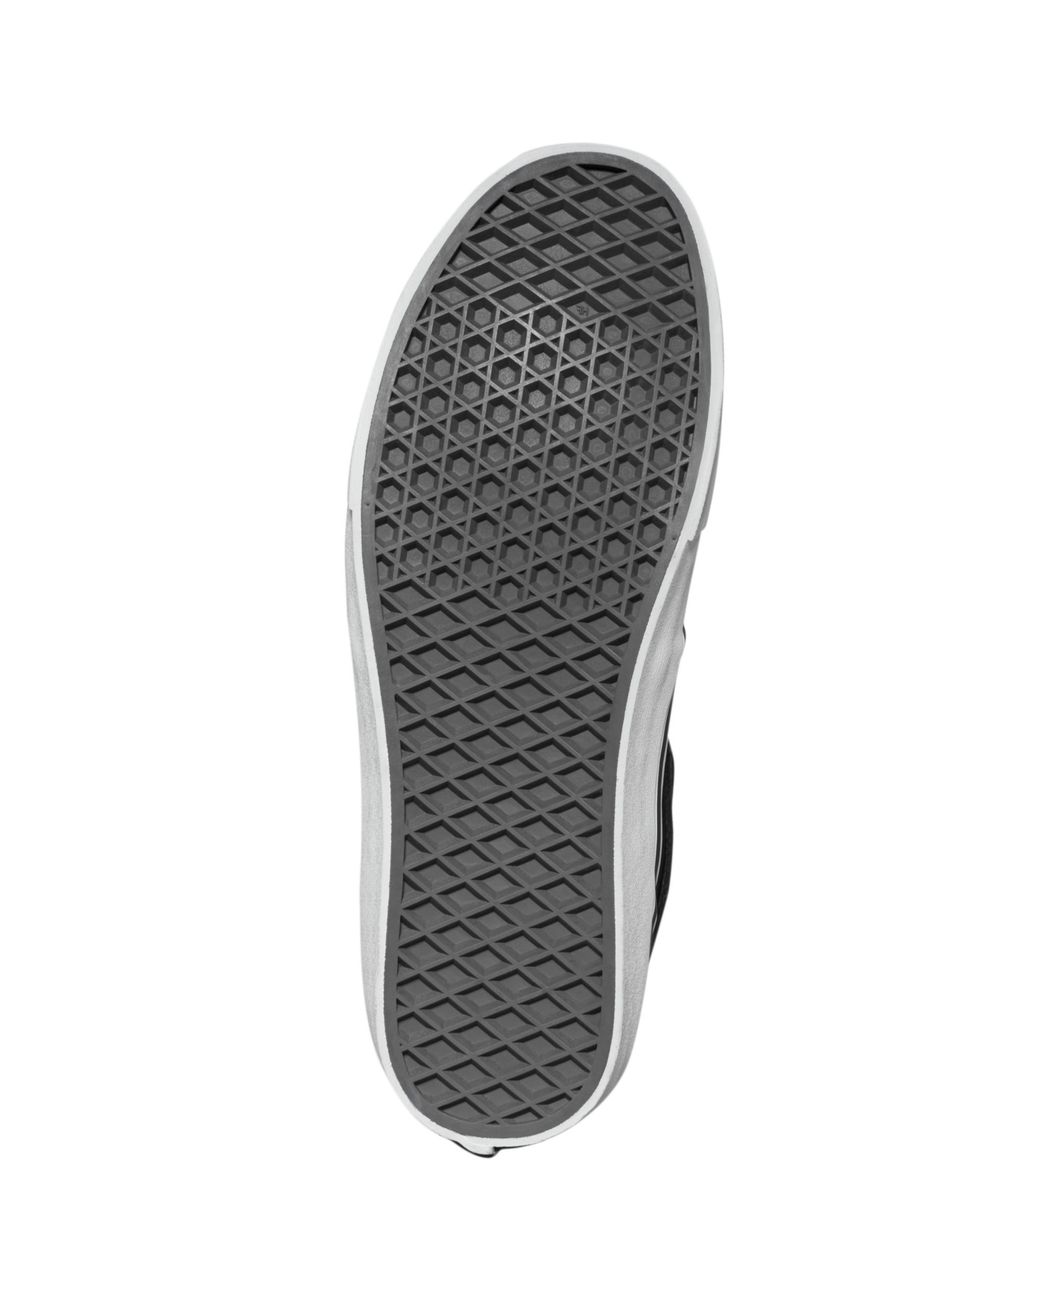 Vans Atwood Hi Sneakers in Black/White (Black) for Men | Lyst